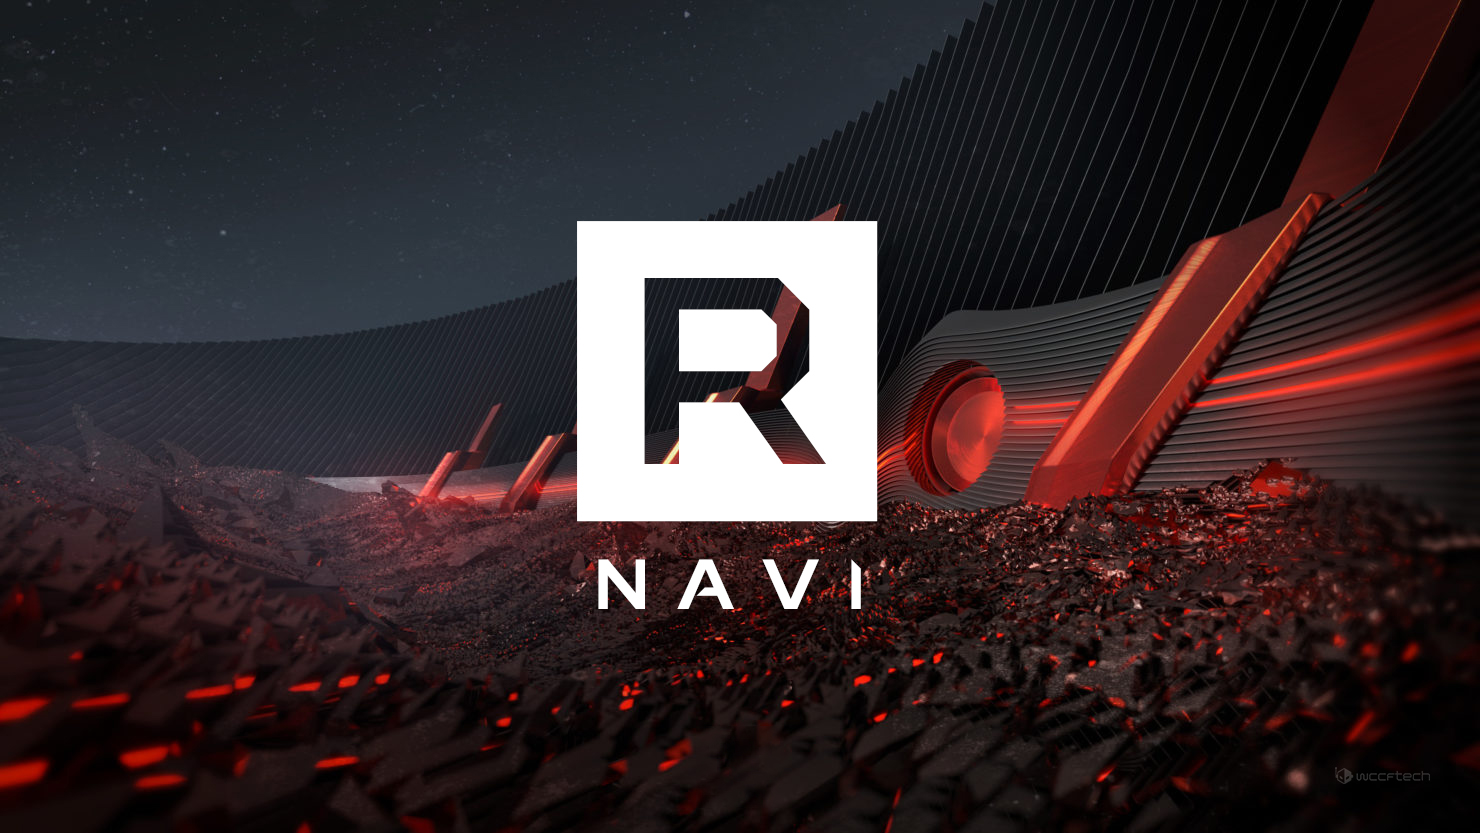 Kebocoran GPU AMD Navi 21 “Big Navi” Menunjukkan Peta Jalan Masa Depan Untuk Kad Grafik Radeon RX